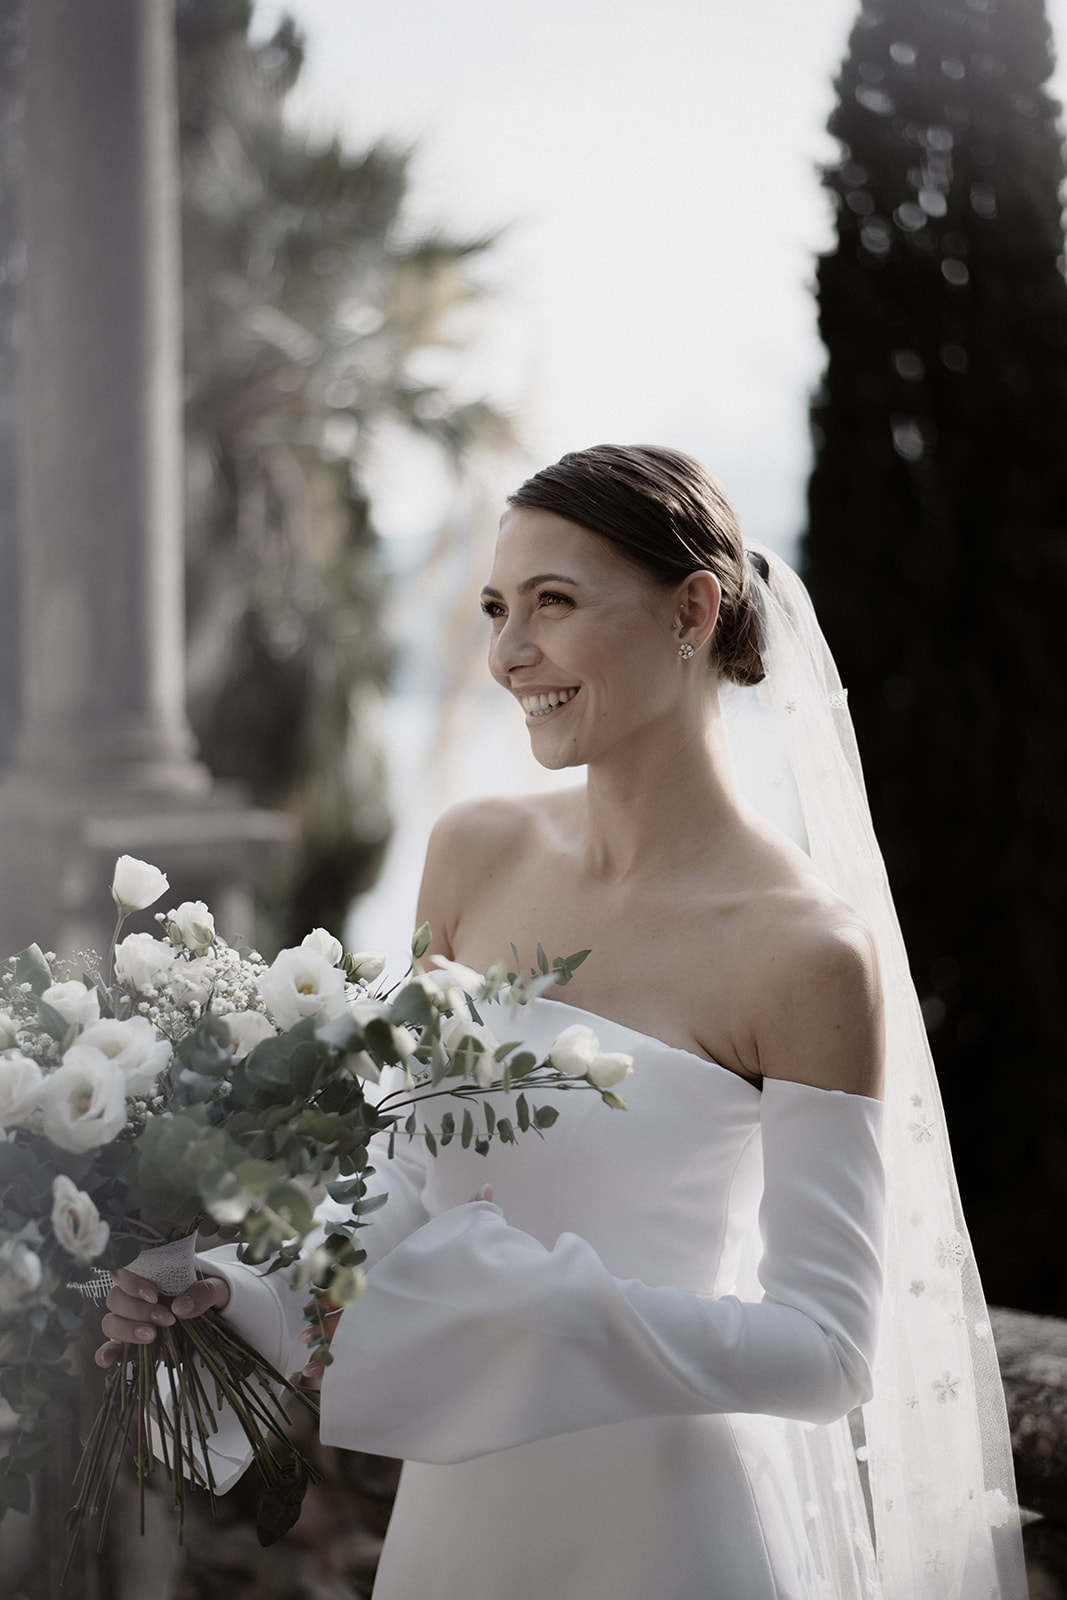 Lake Como couple elopement photoshoot in Villa Monastero, Varenna